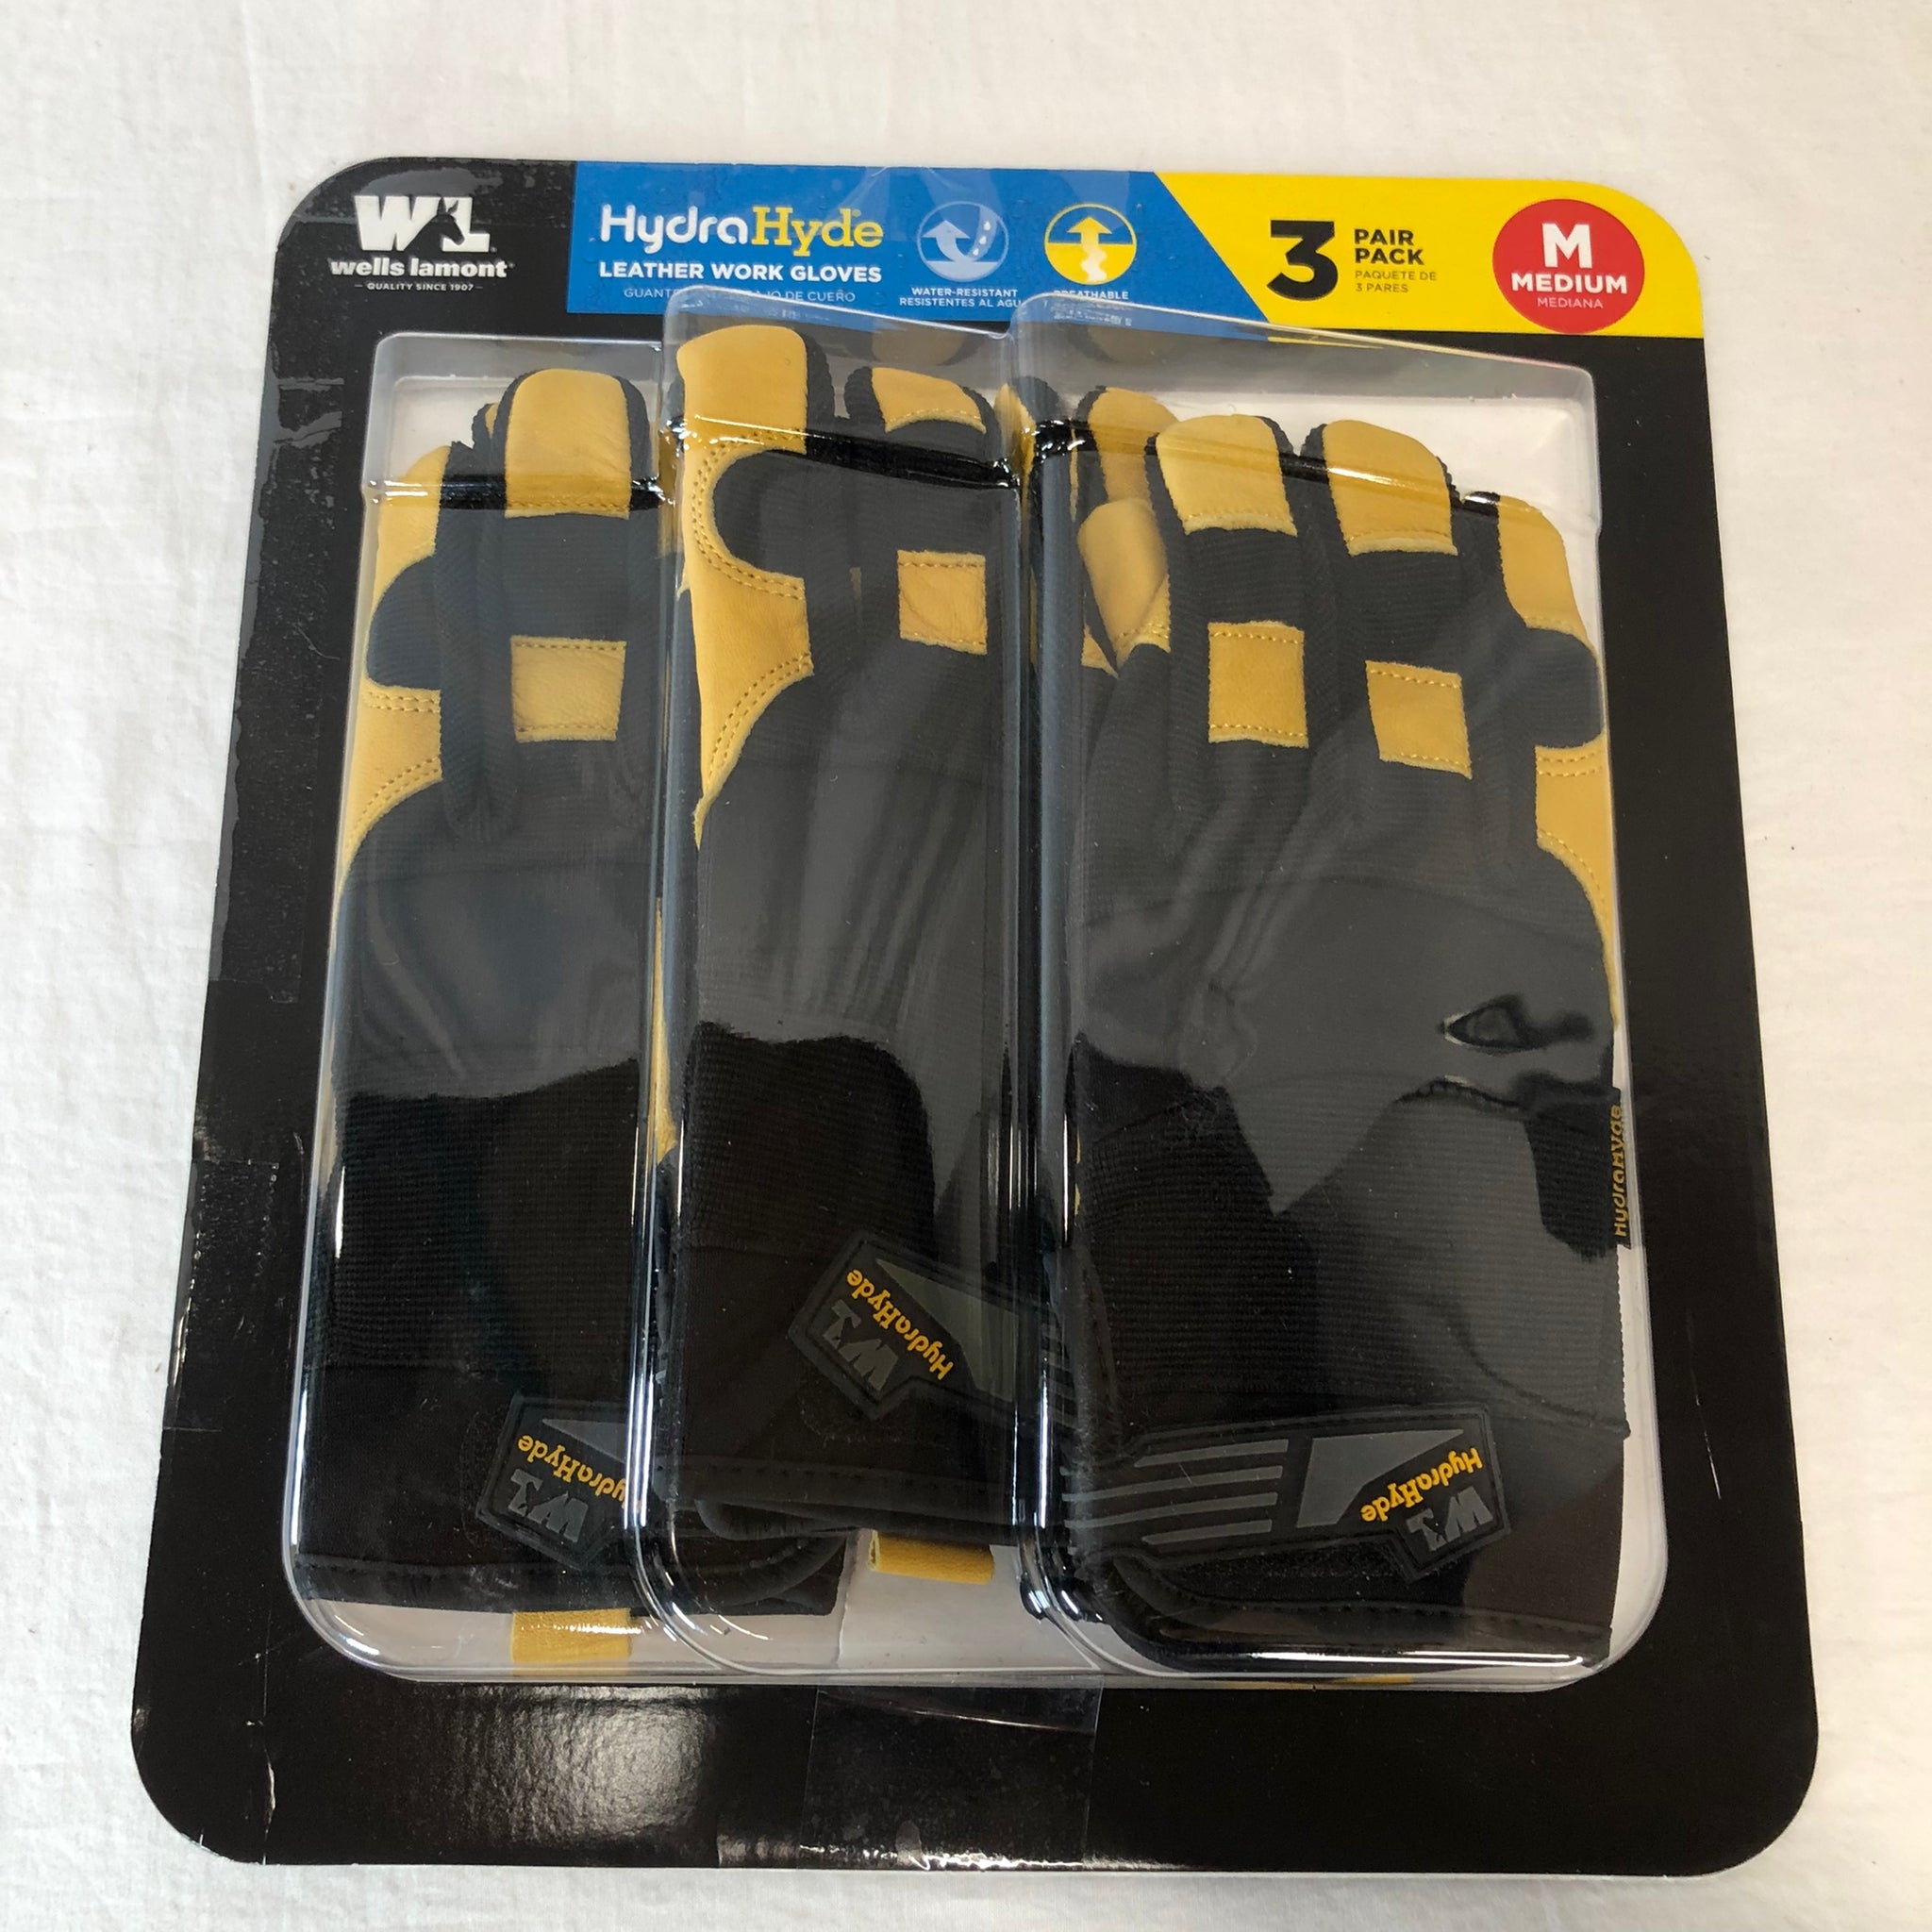 Wells Lamont Men's HydraHyde Leather Work Gloves, Medium, 3 pairs